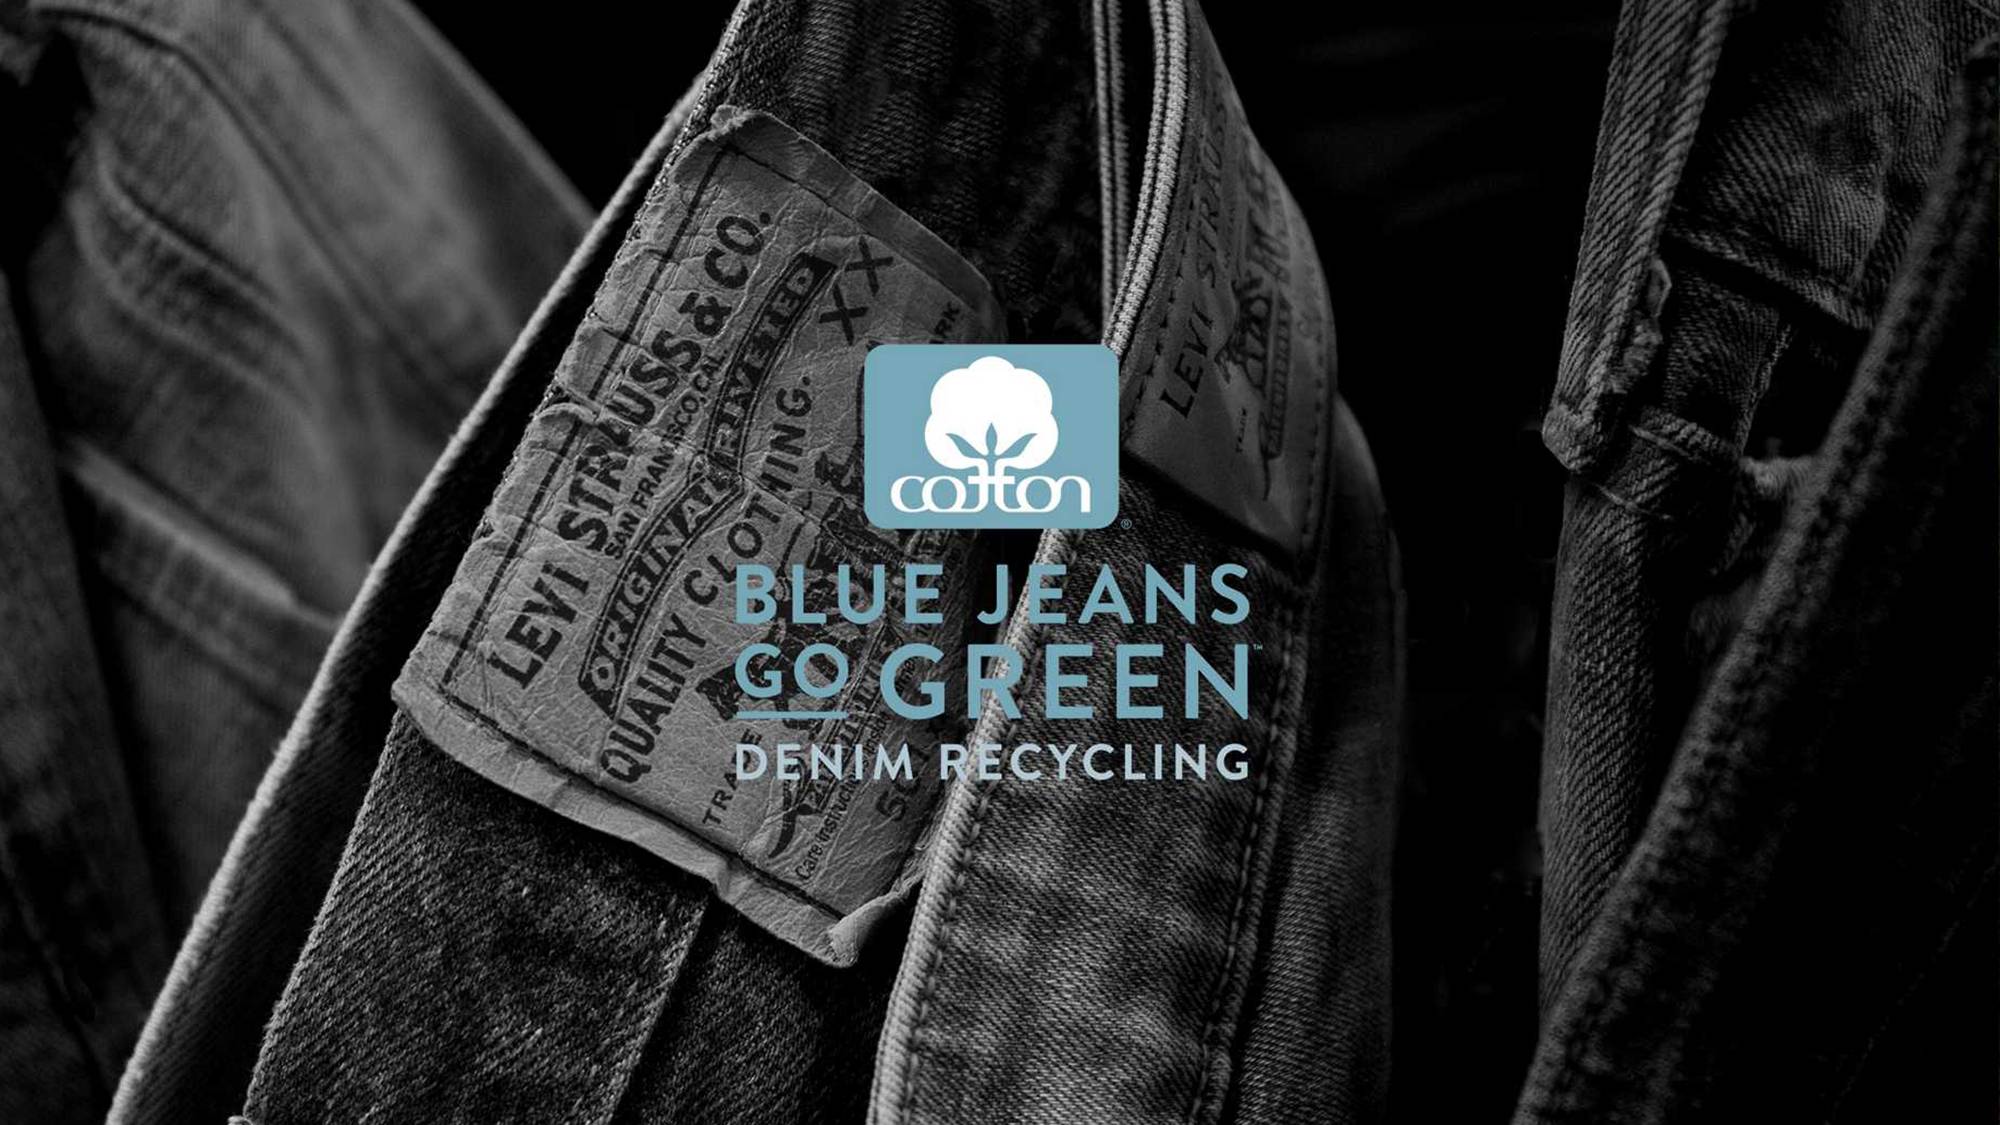 Blue jeans go green logo